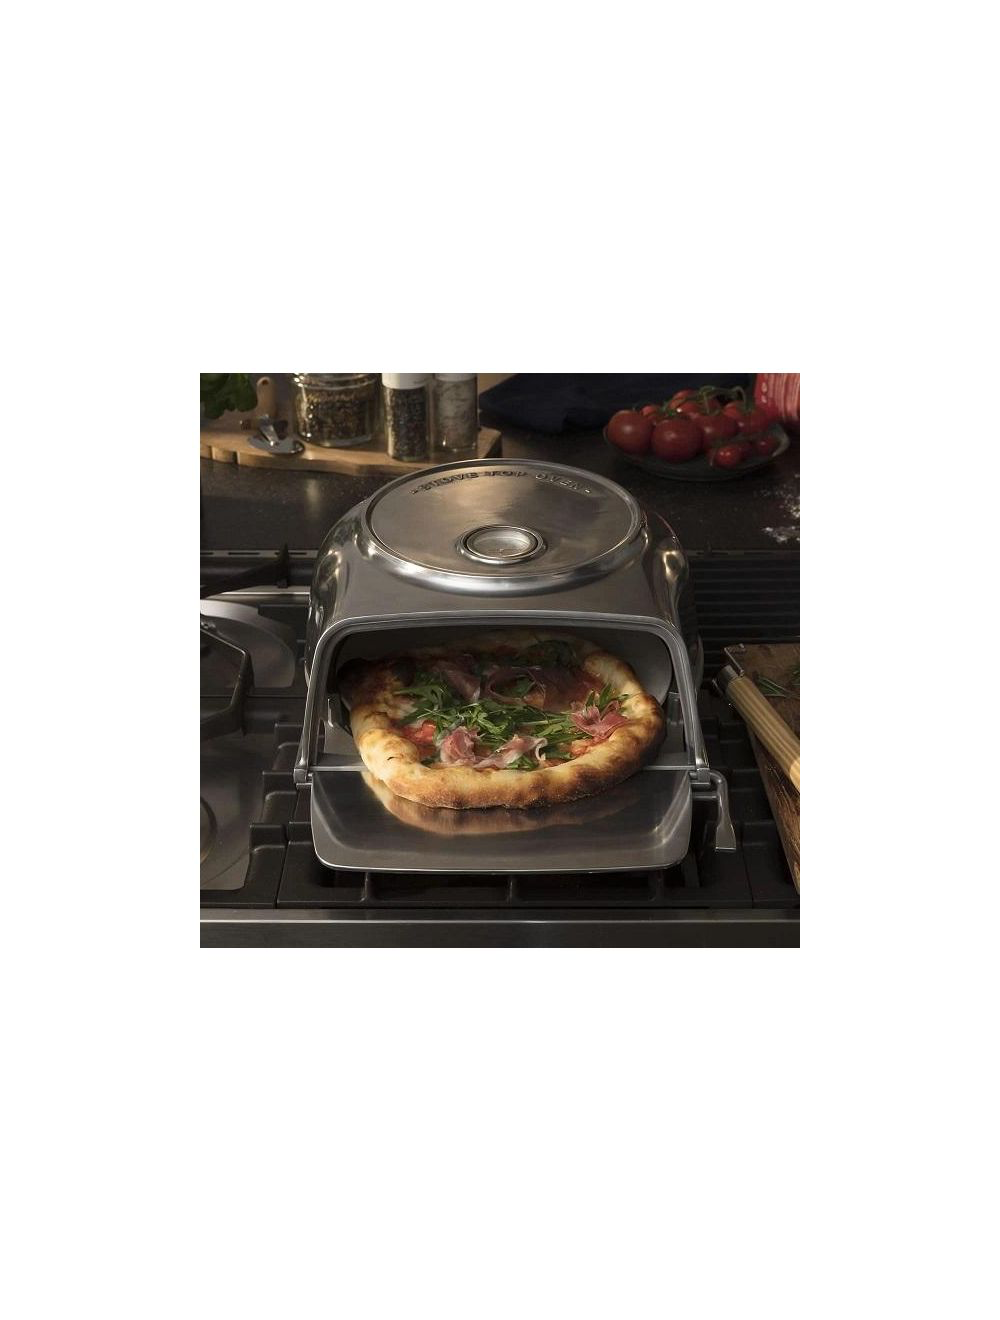 Fernus Stovetop Pizza Oven Matted Black